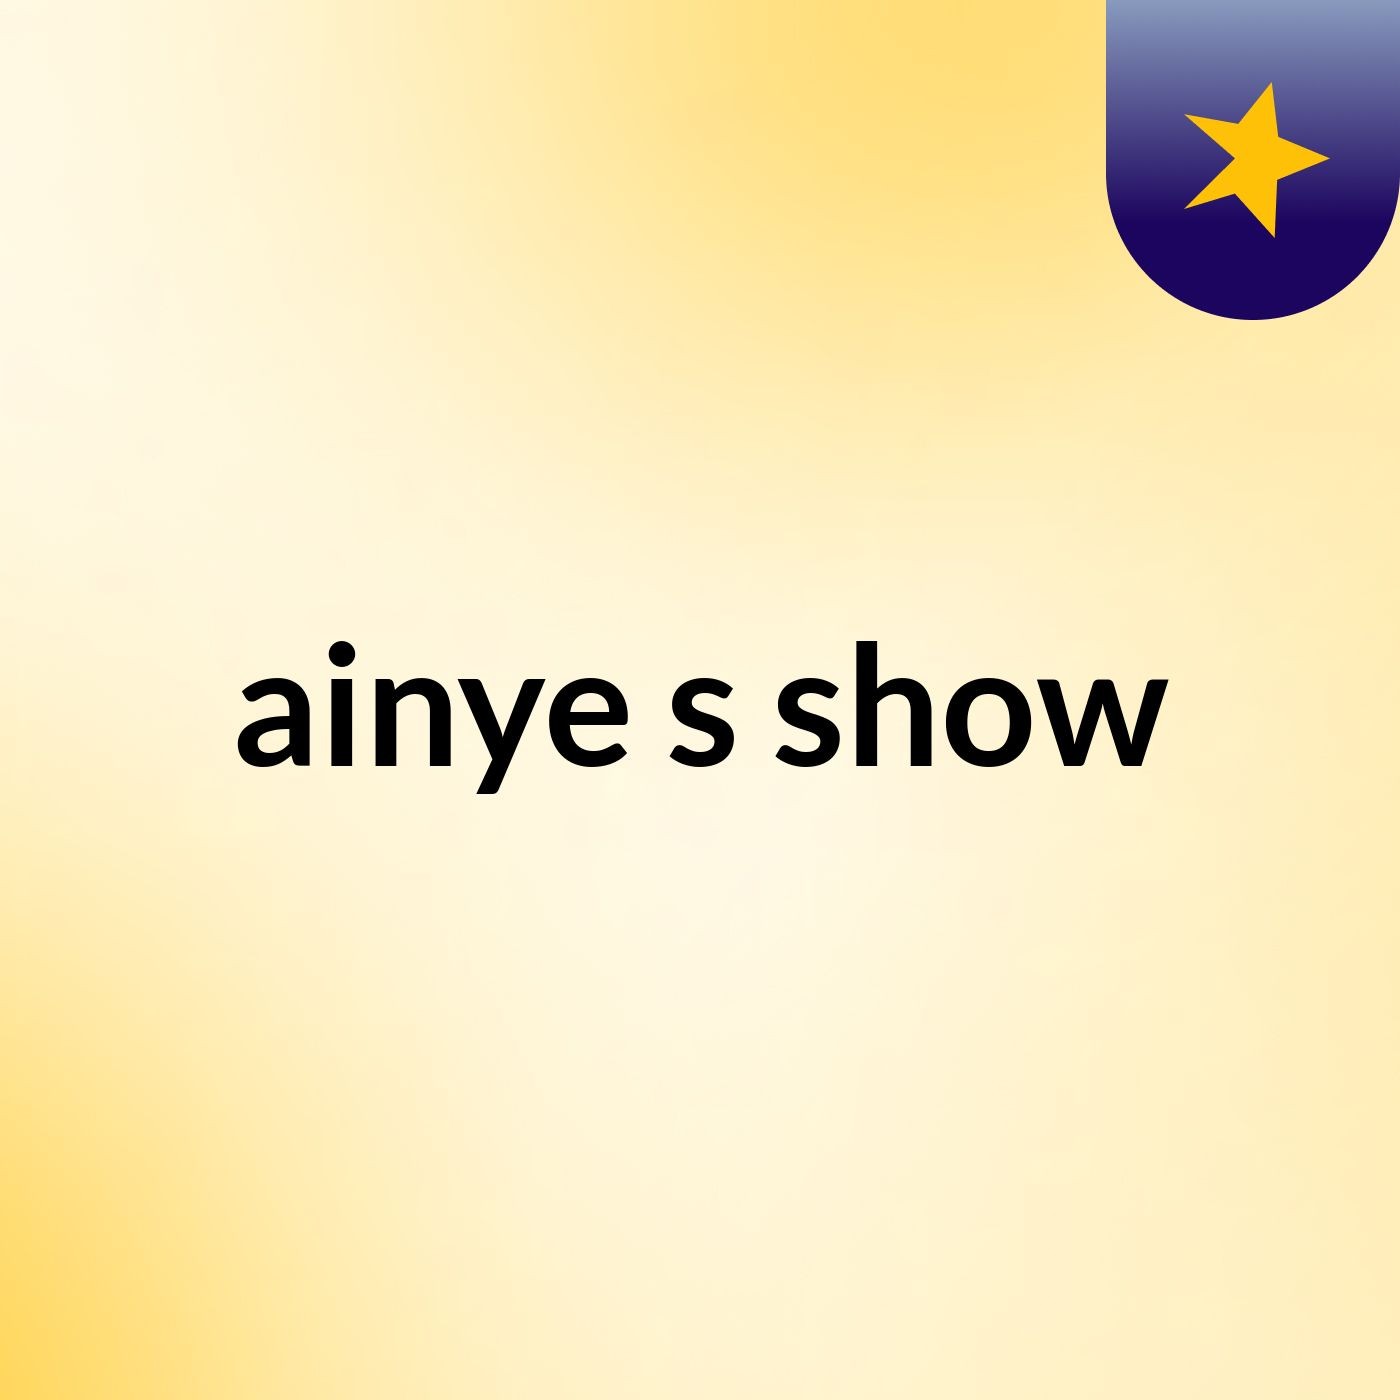 ainye's show